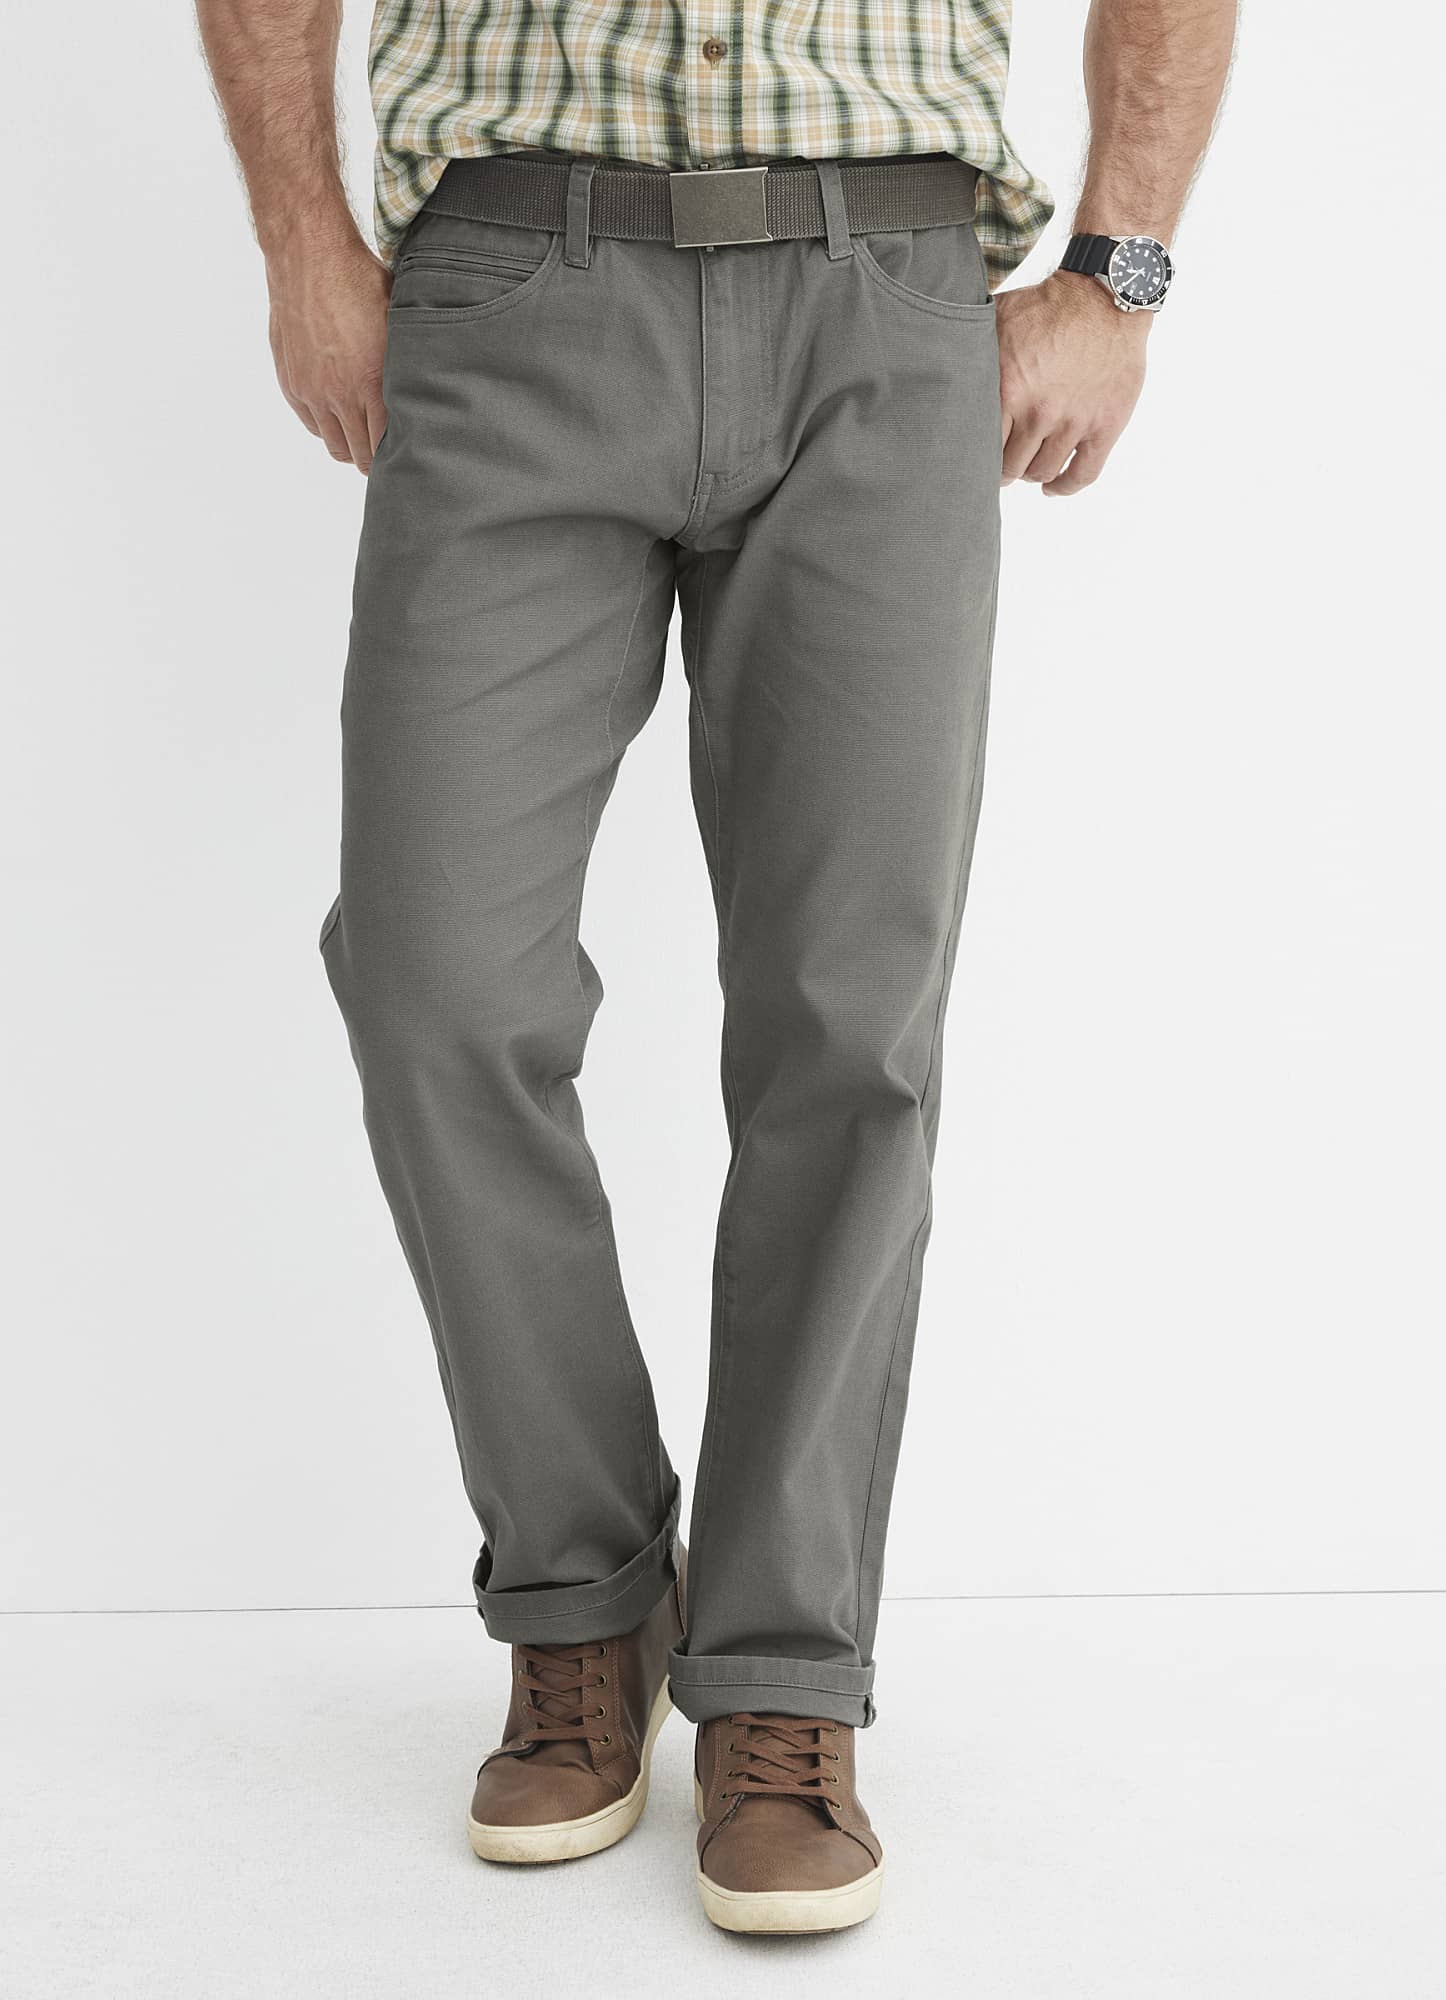 Jockey Cargo Pants | Men's Scrub Pants | Medical Scrubs Online – Labwear.com